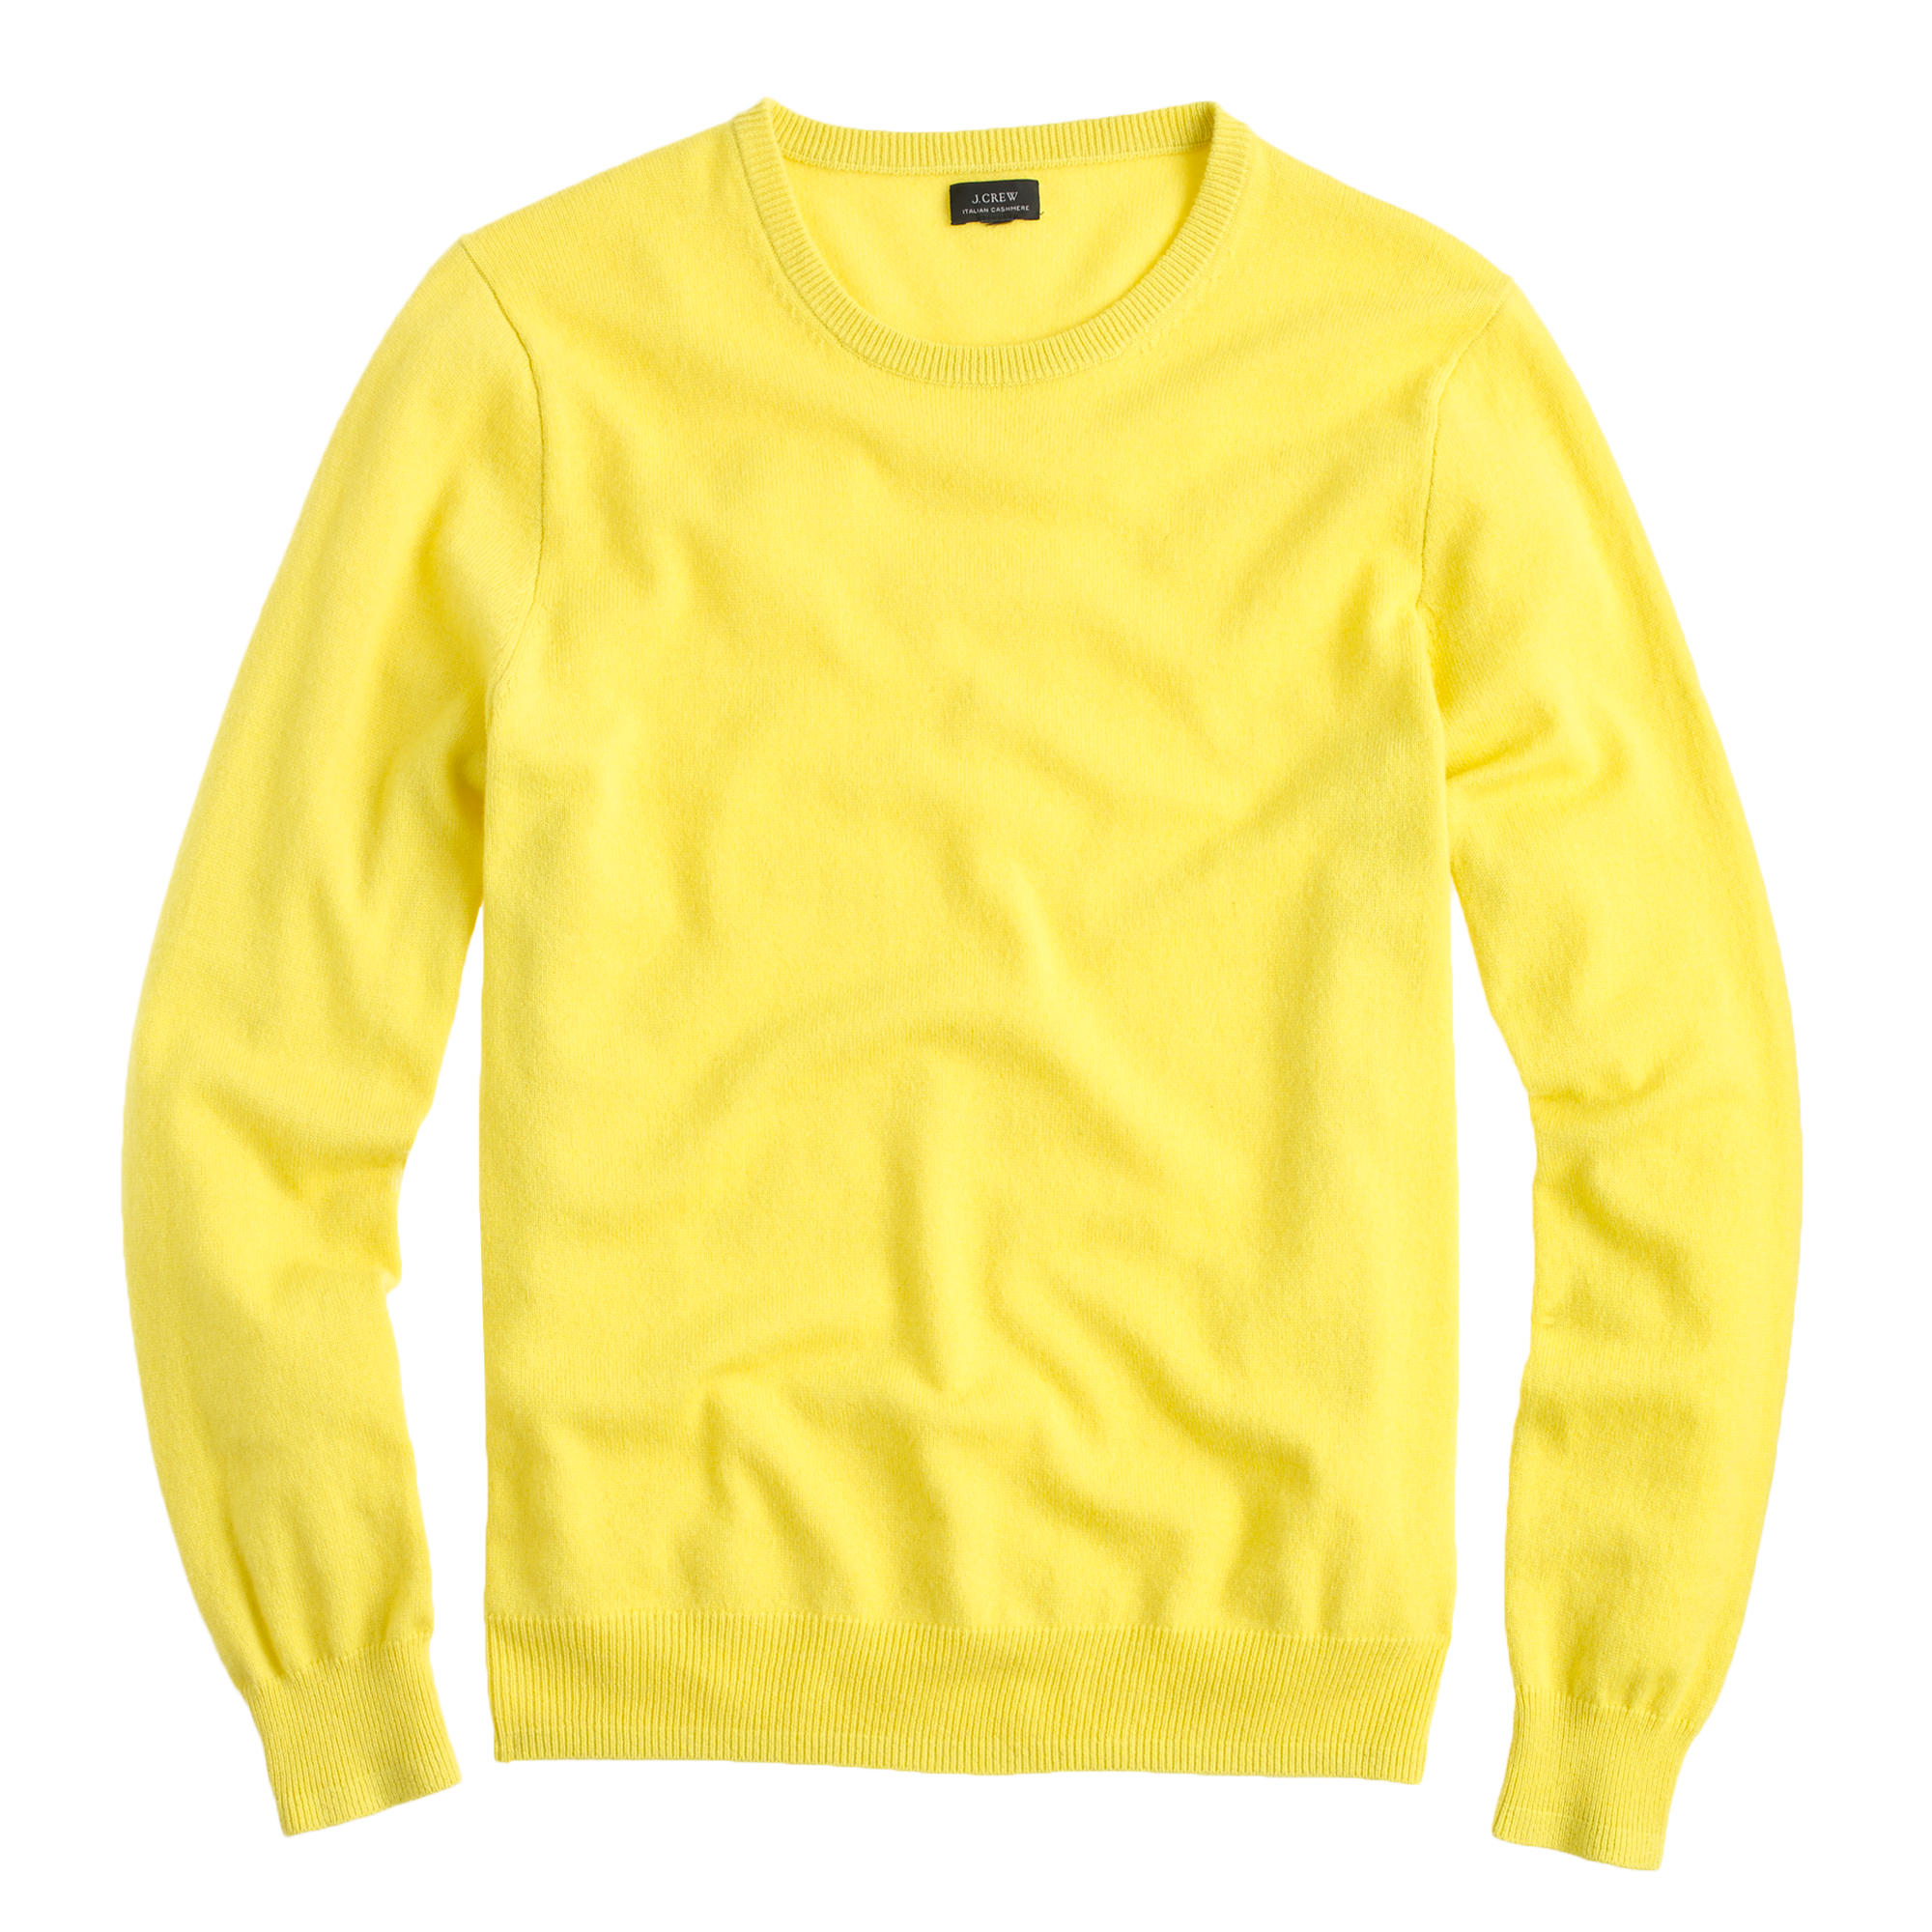 J.Crew Italian Cashmere Crewneck Sweater in Yellow for Men - Lyst